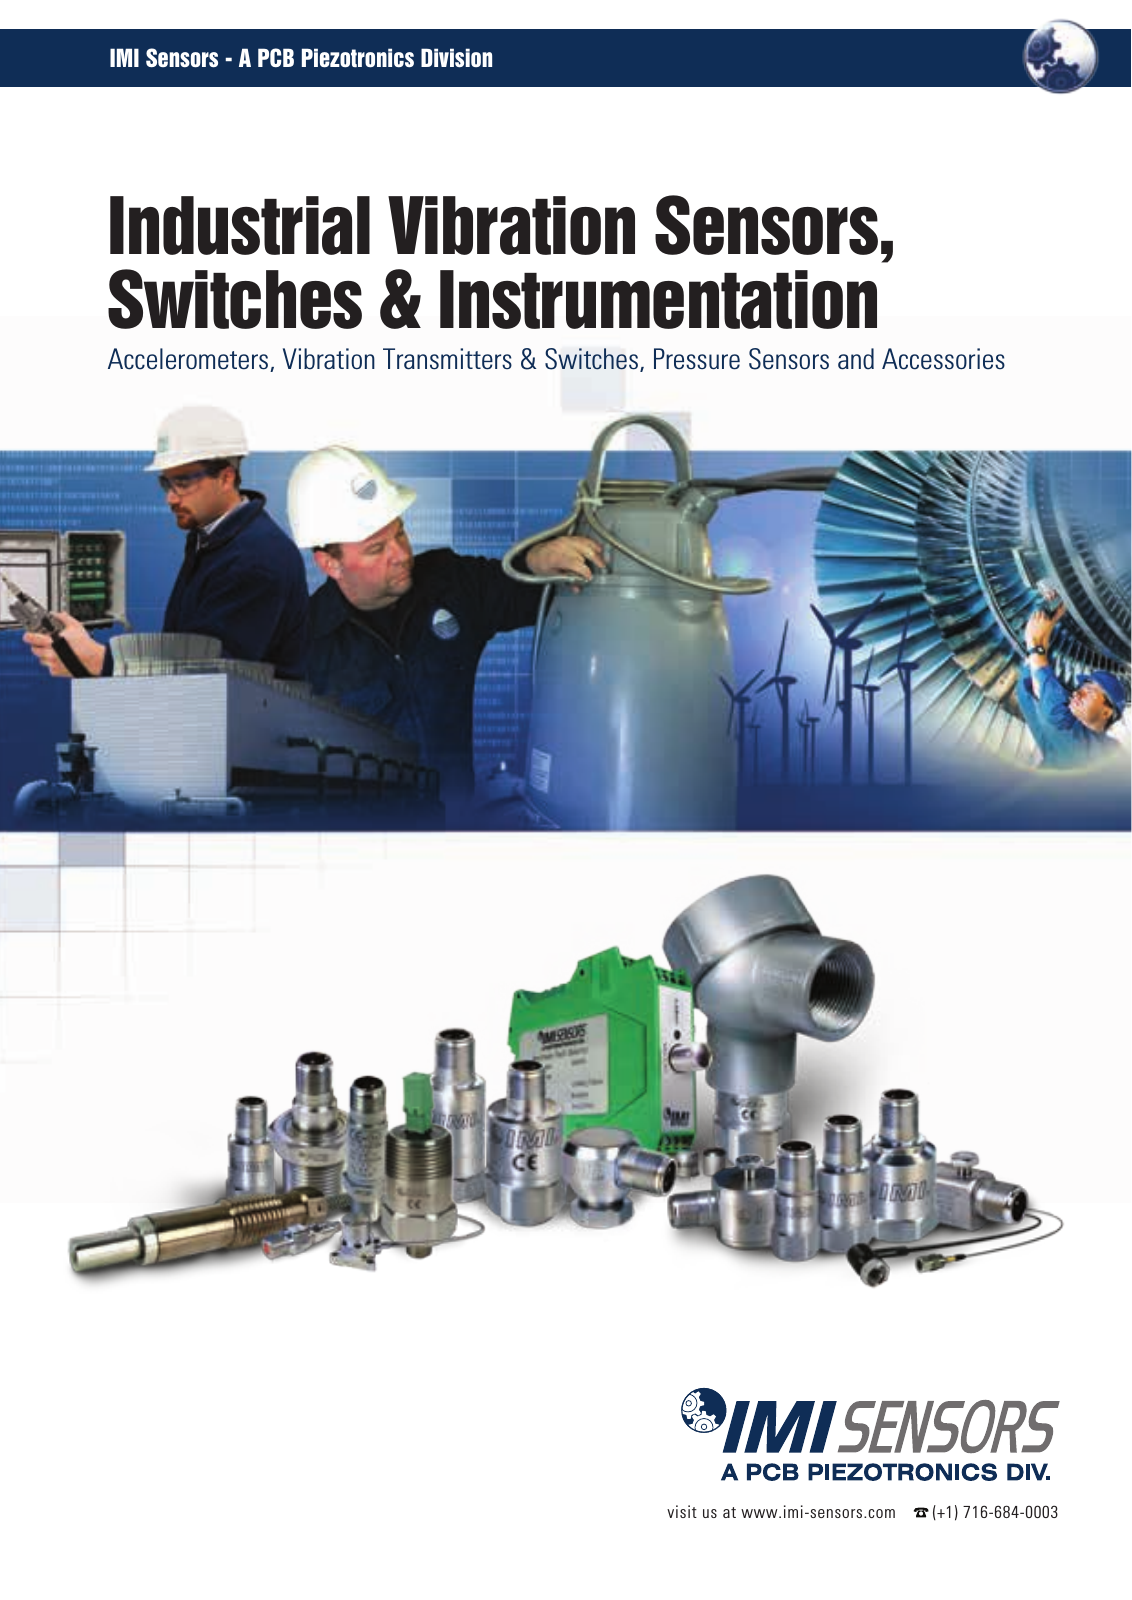 Vorschau IMI Industrial Vibration Sensors Katalog Seite 1